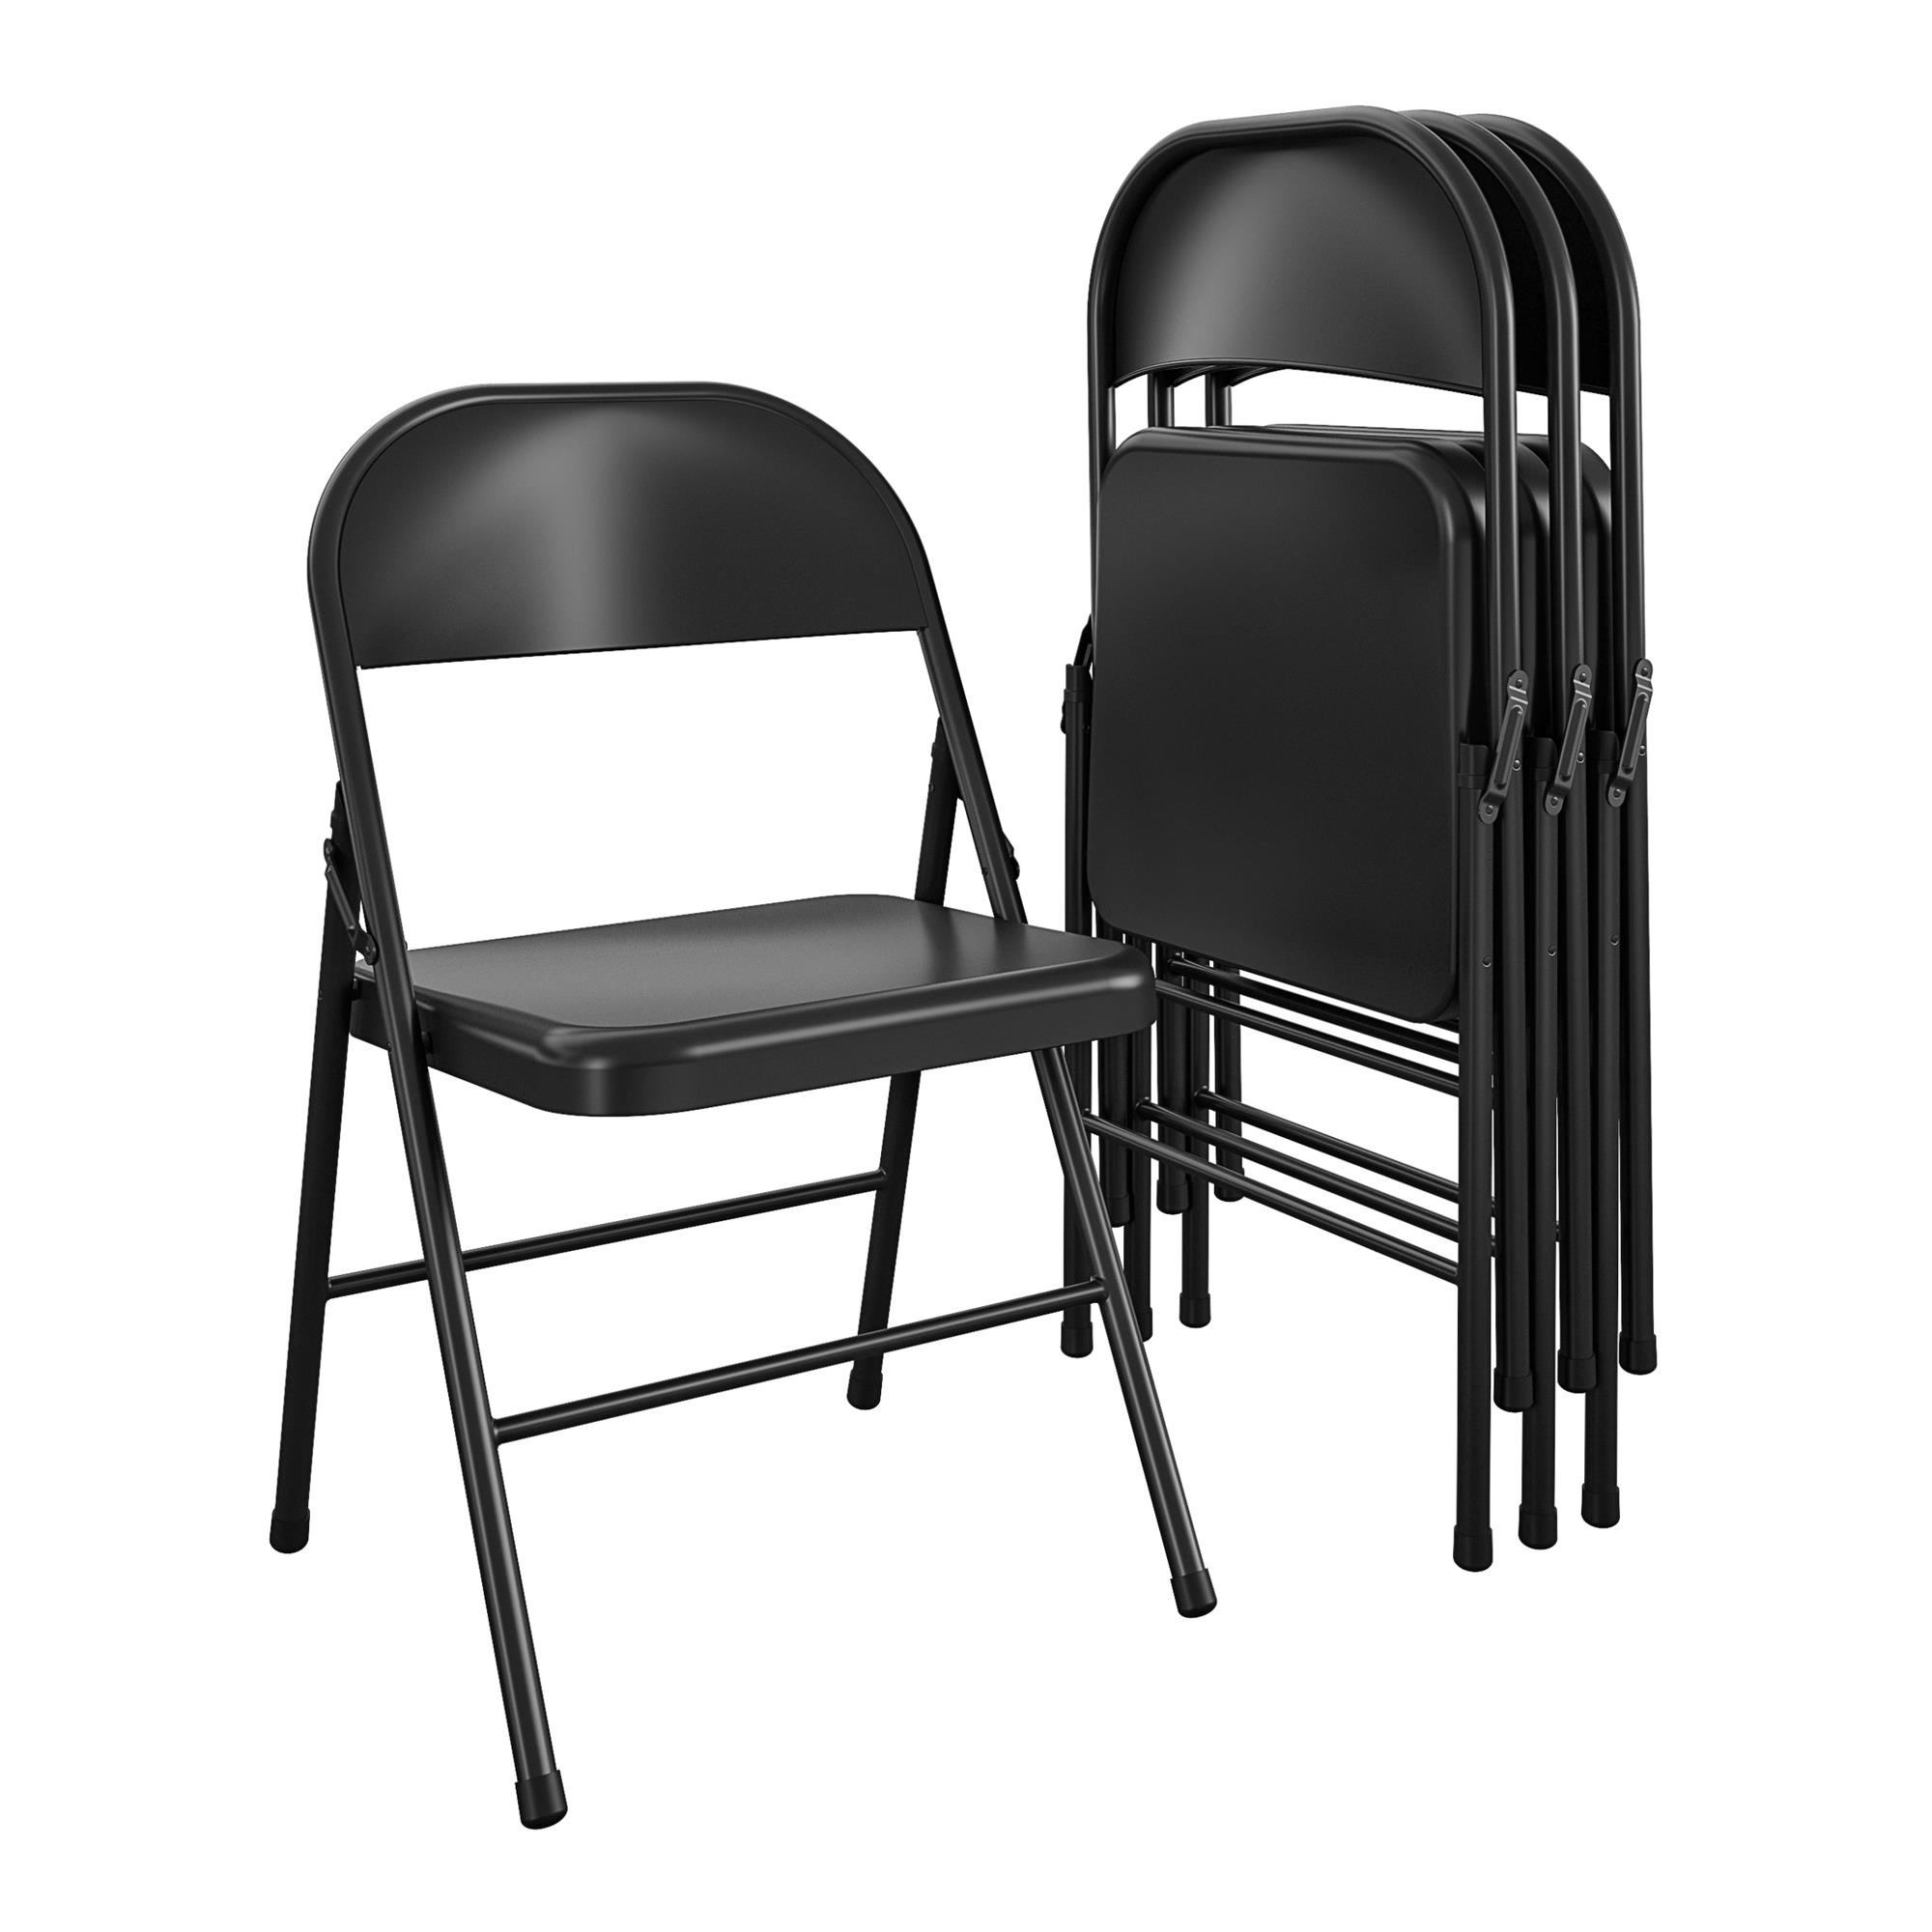 Mainstays Steel Folding Chair (4 Pack), Black - image 1 of 14